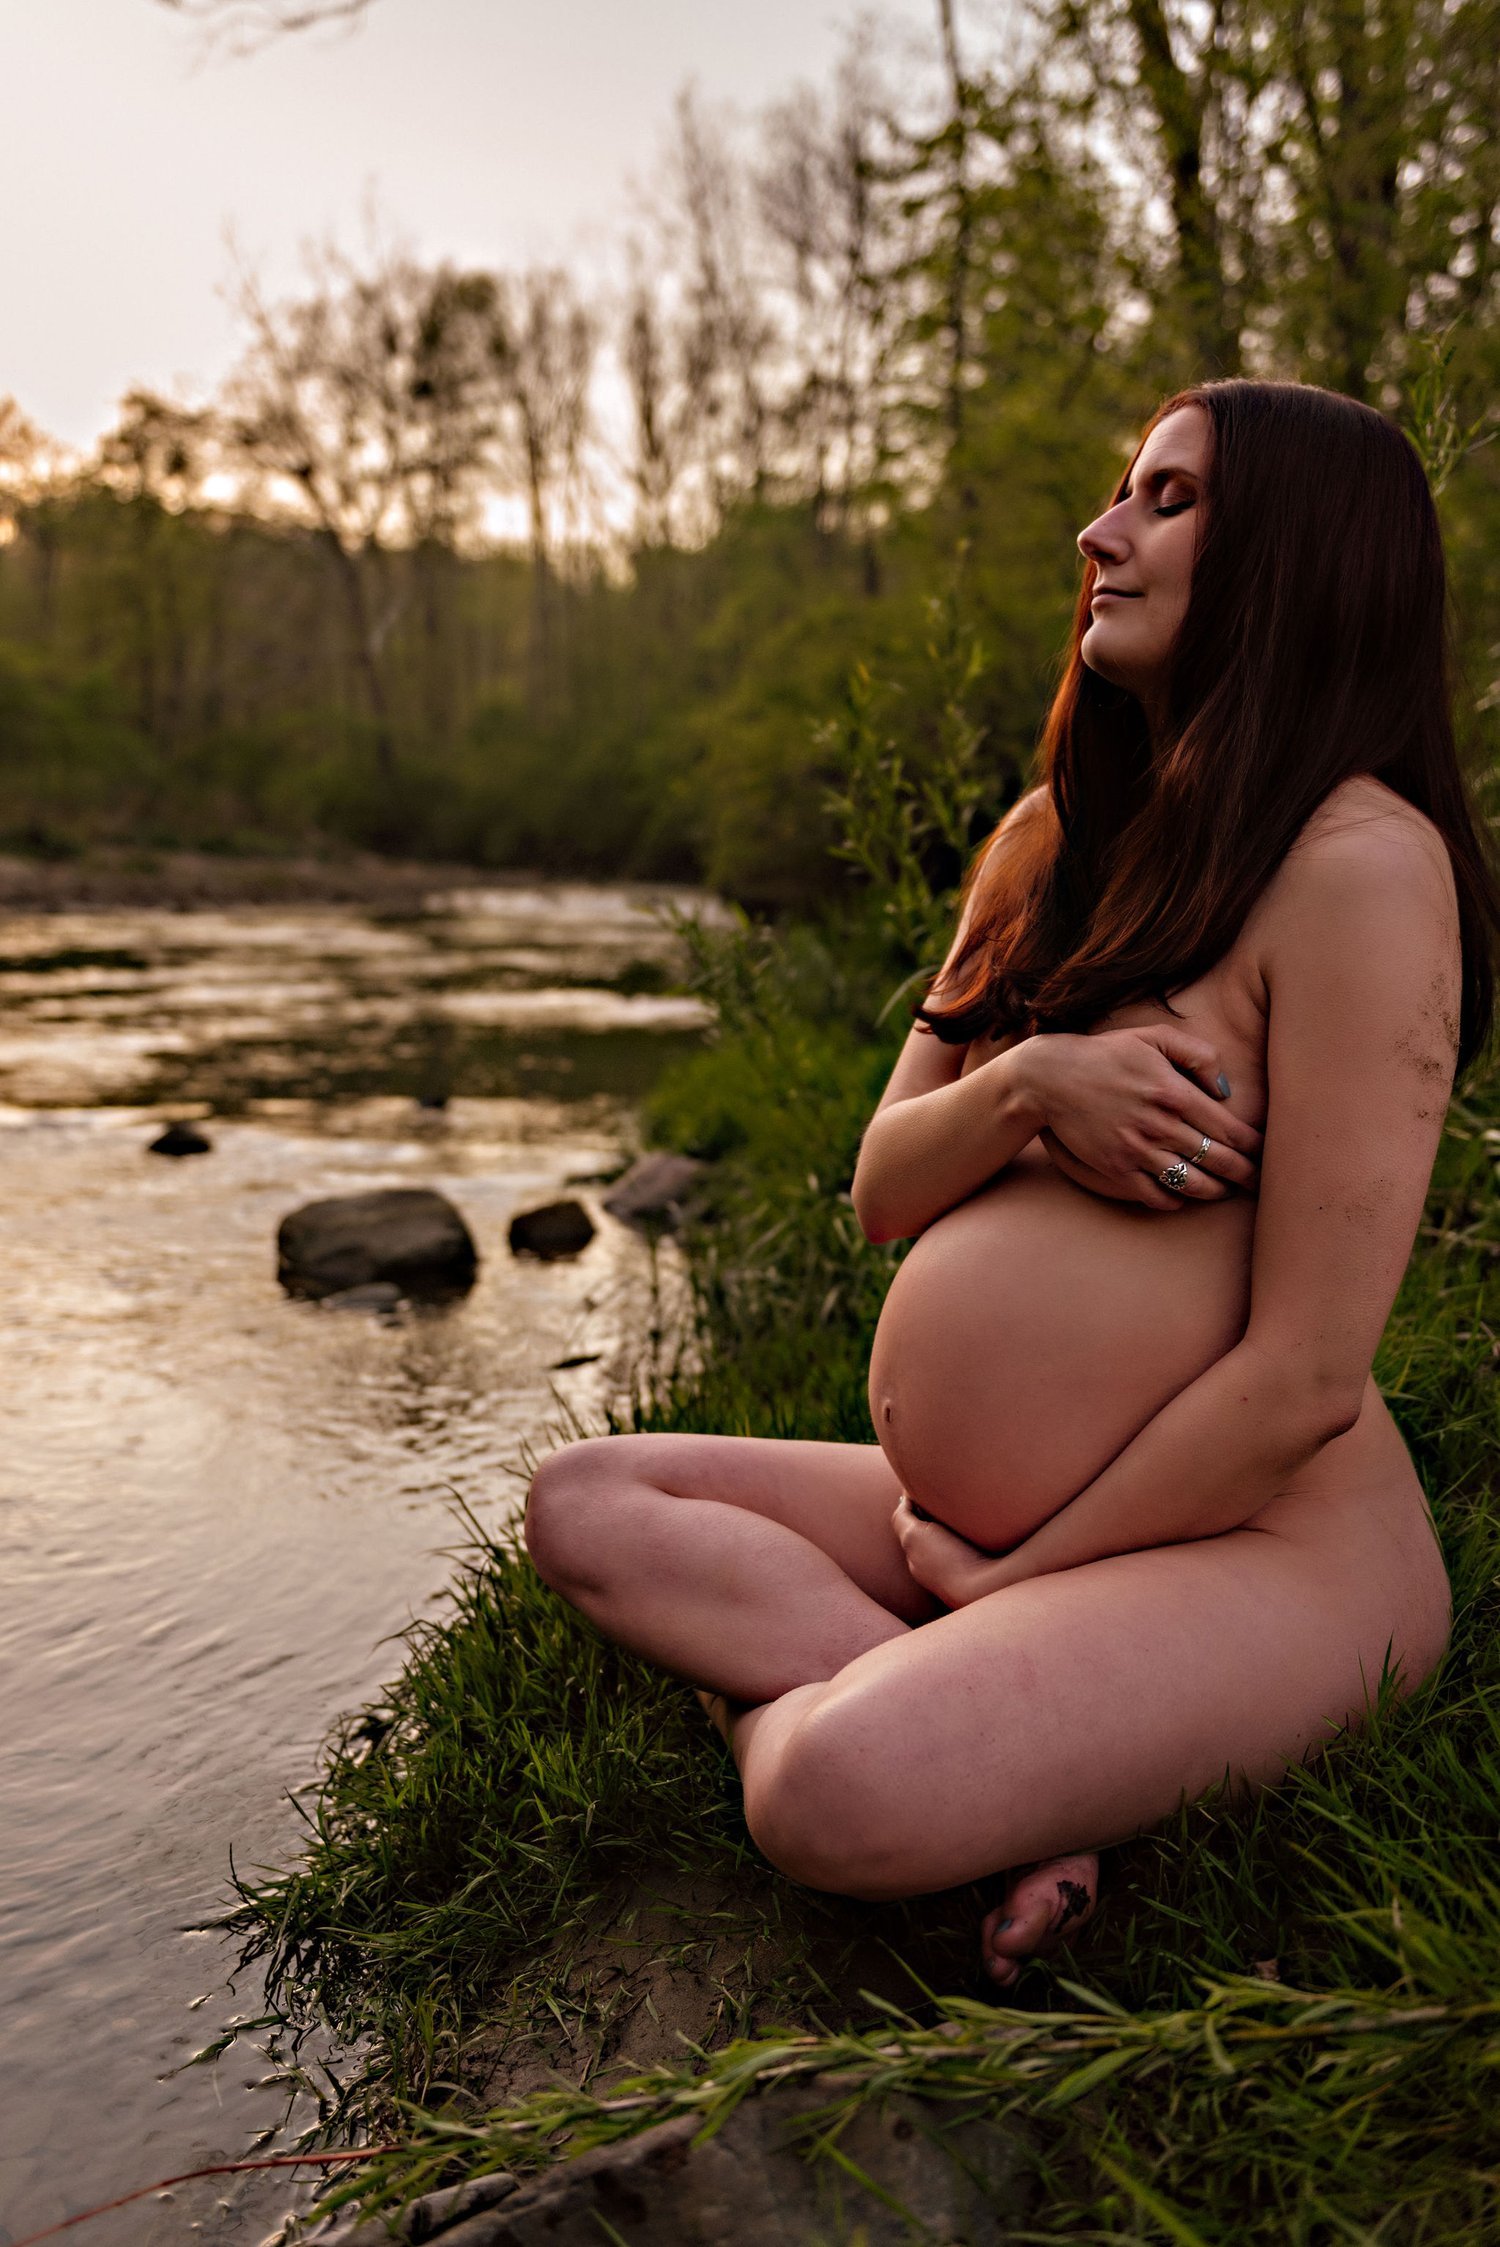 akron-maternity-session-boudoir-nude-photographer-lauren-grayson-117.jpeg